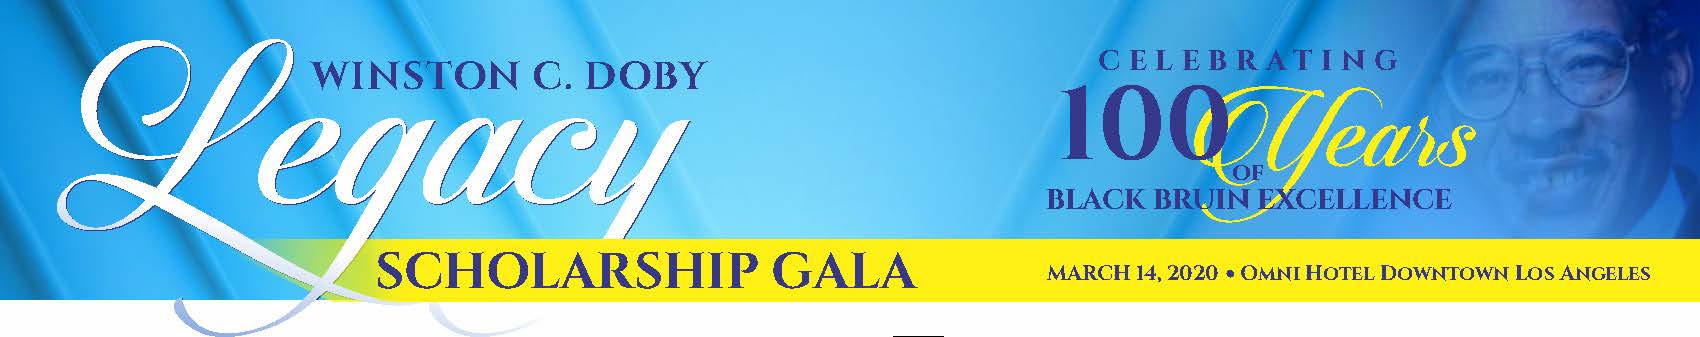 Winston C. Doby Legacy Scholarship Gala 2020